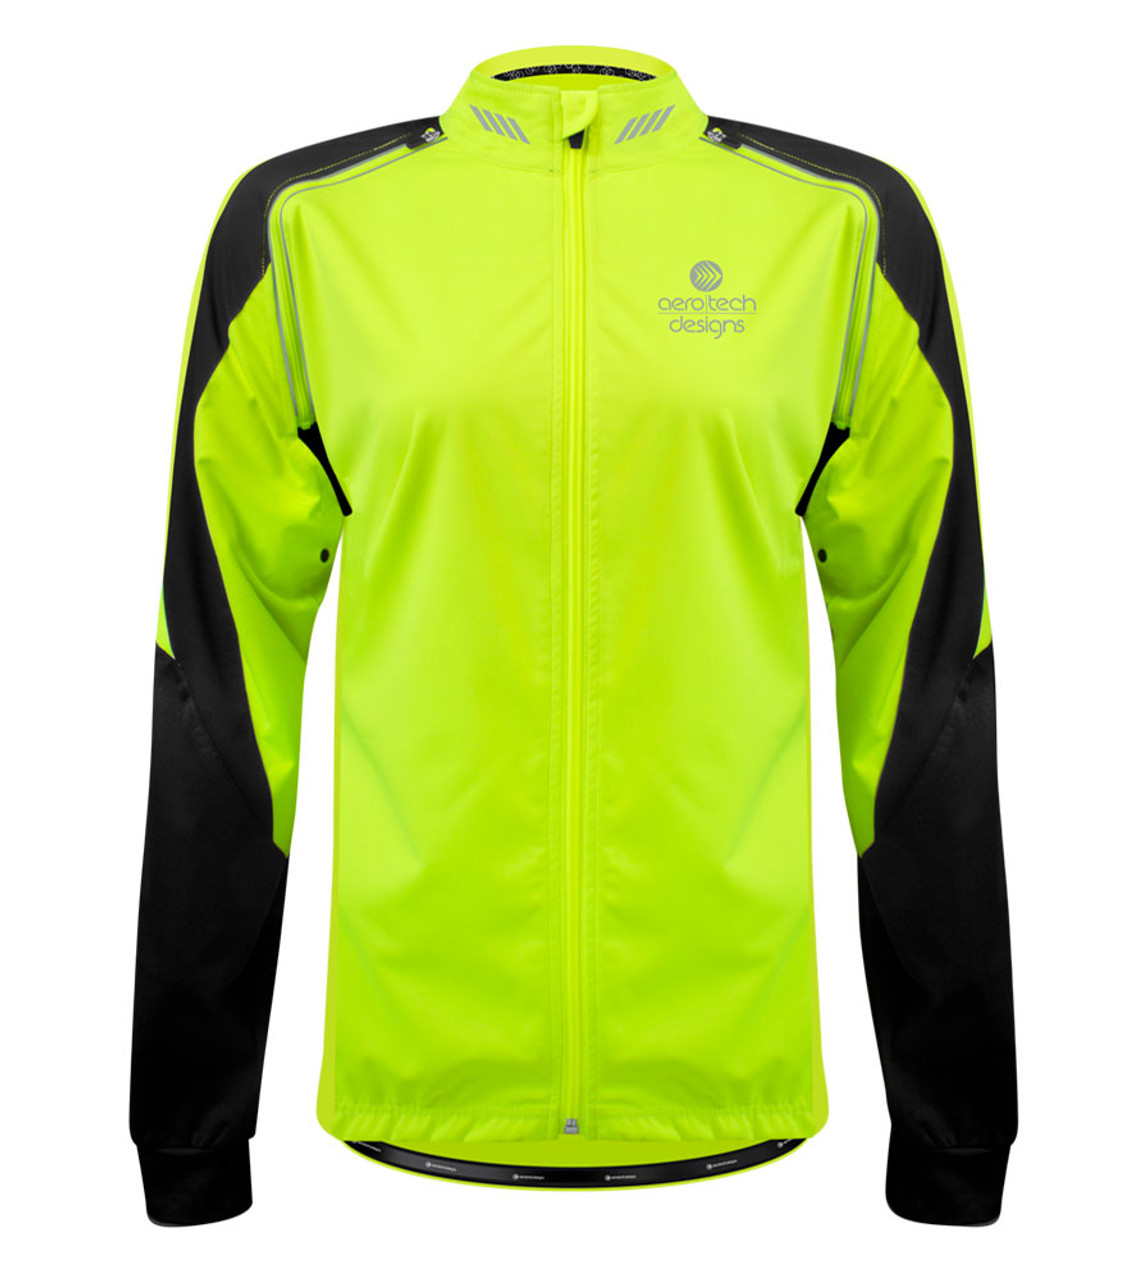 Women's Safety Yellow Bolero Windbreaker Jacket with Zip-Off Sleeves